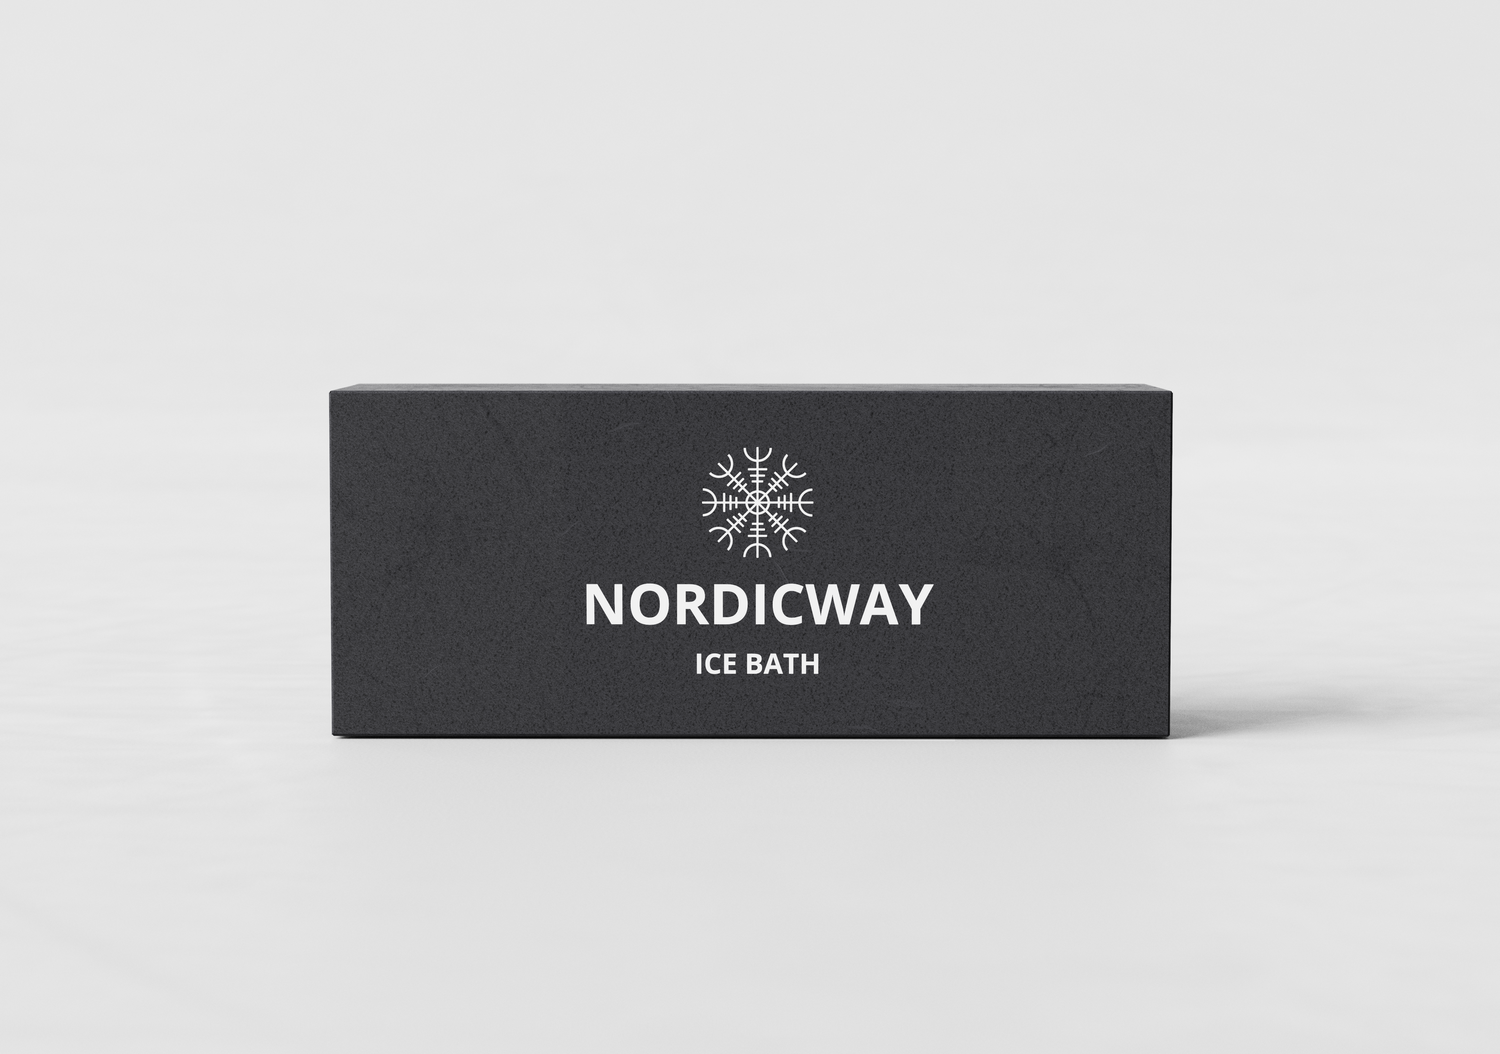 nordicway ice bath box on grey background 